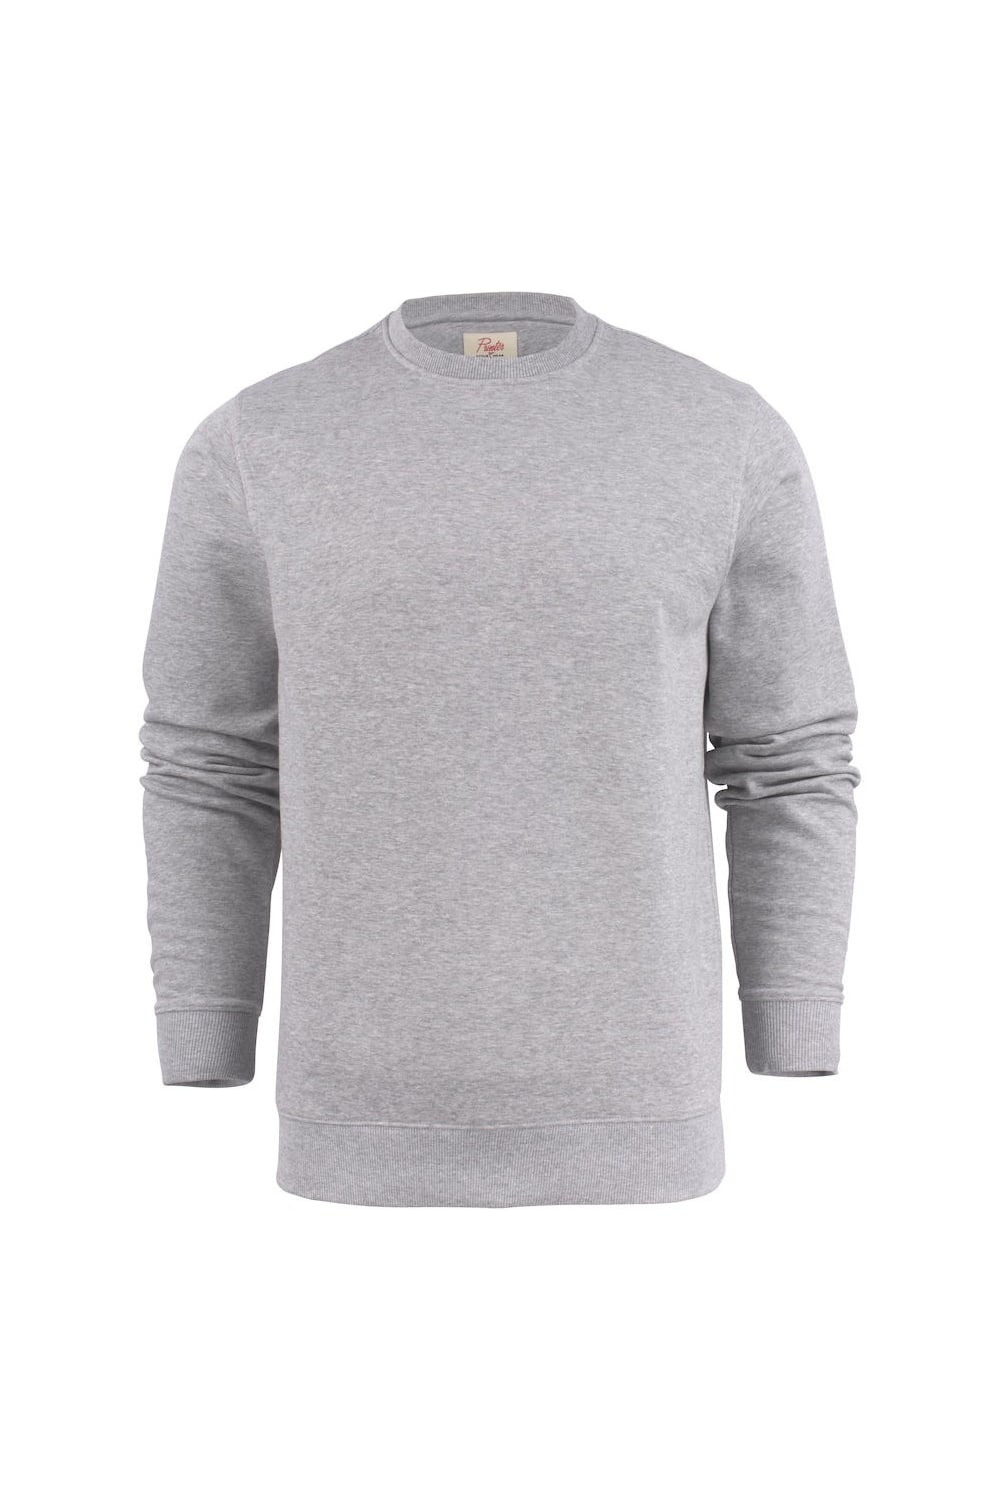 Printer Unisex Adult Softball RSX Melange Sweatshirt (Gray)